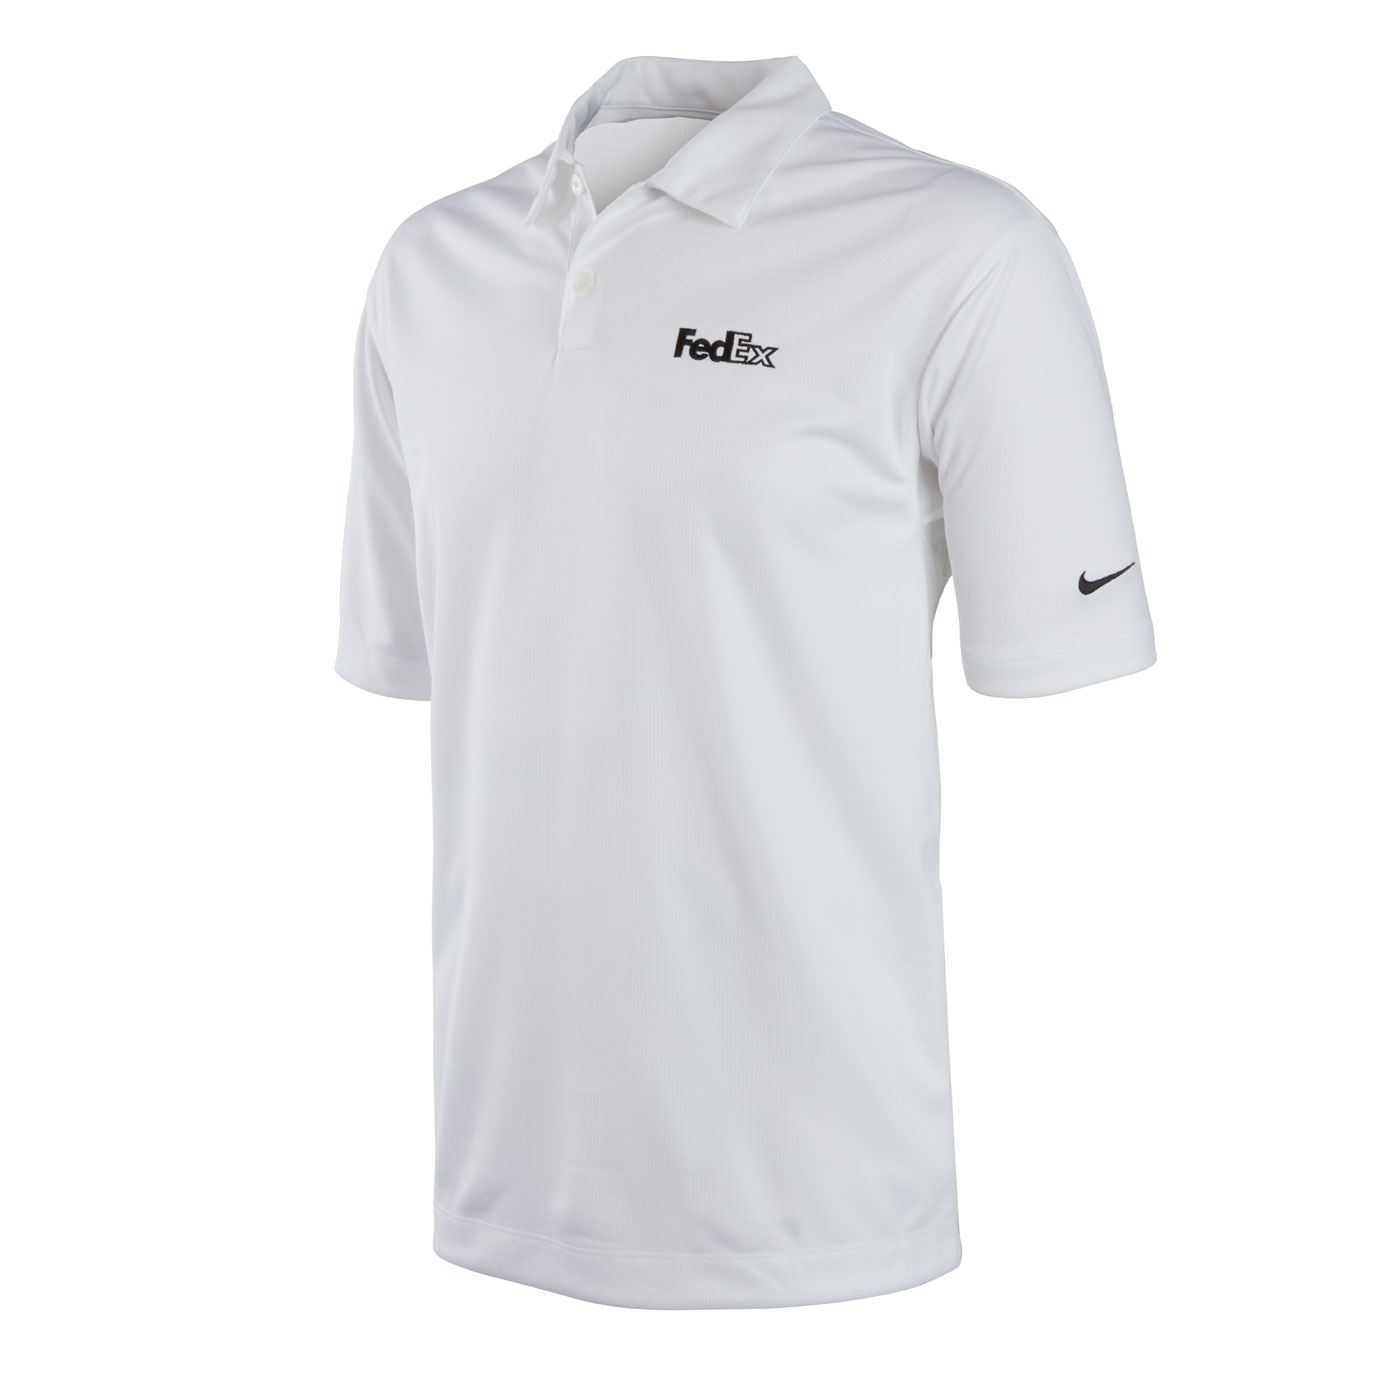 FedEx Nike Dri-FIT Pebble Polo | The FedEx Company Store